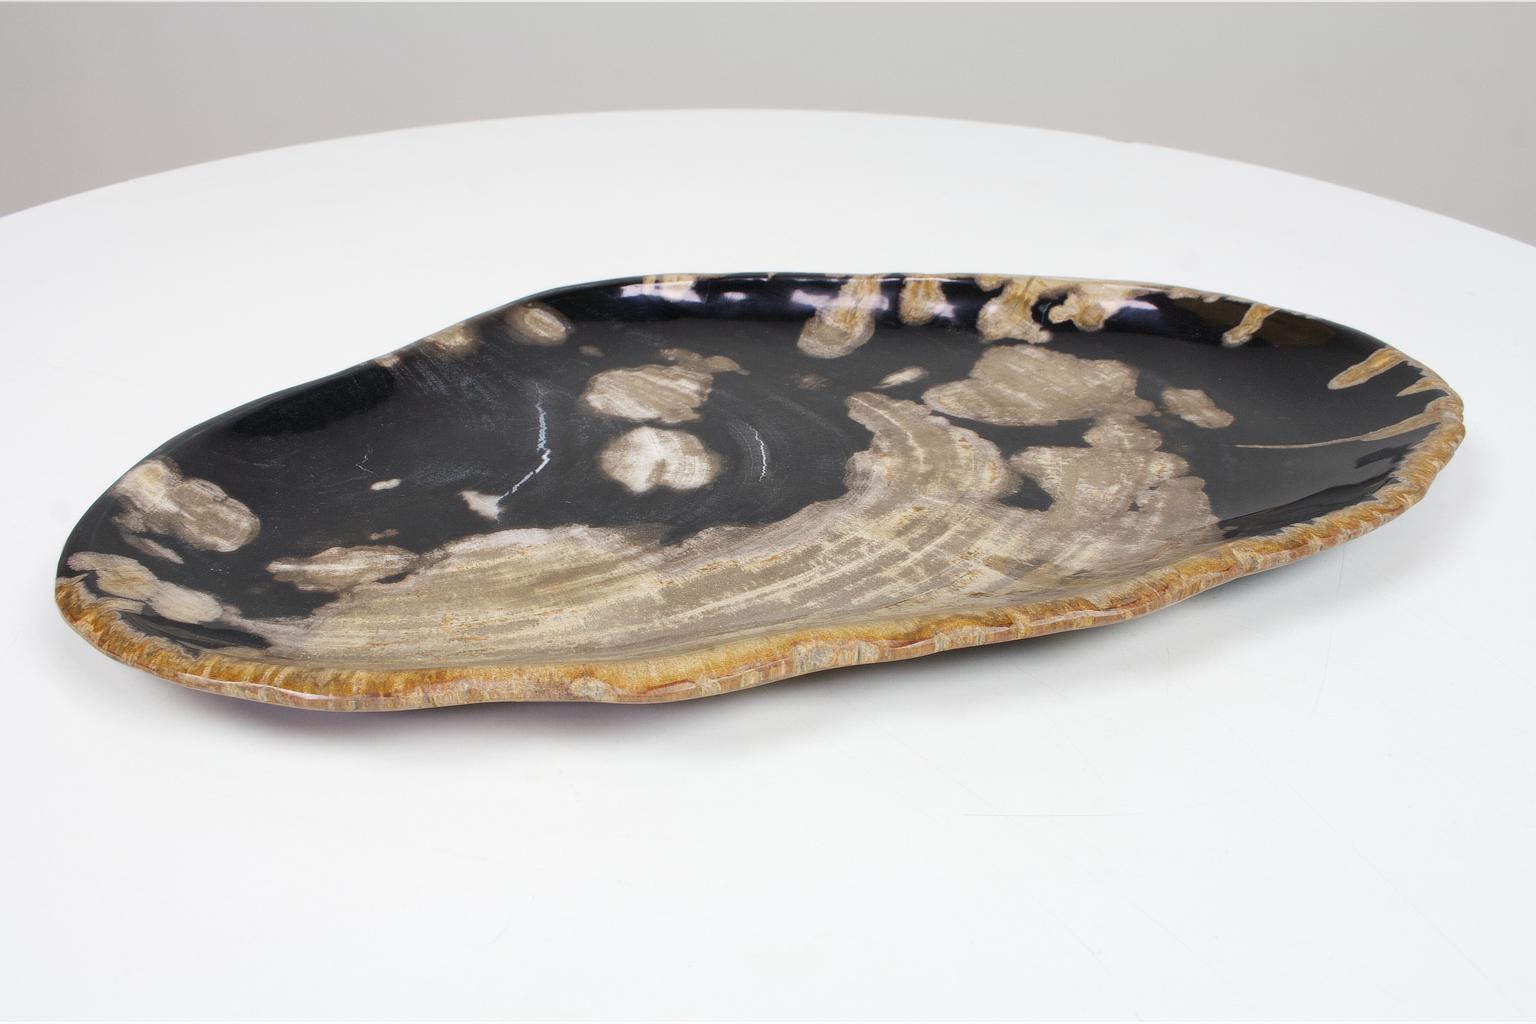 Organic Modern Black and Beige Oval Shaped Petrified Wooden Platter or Plate Organic Origin